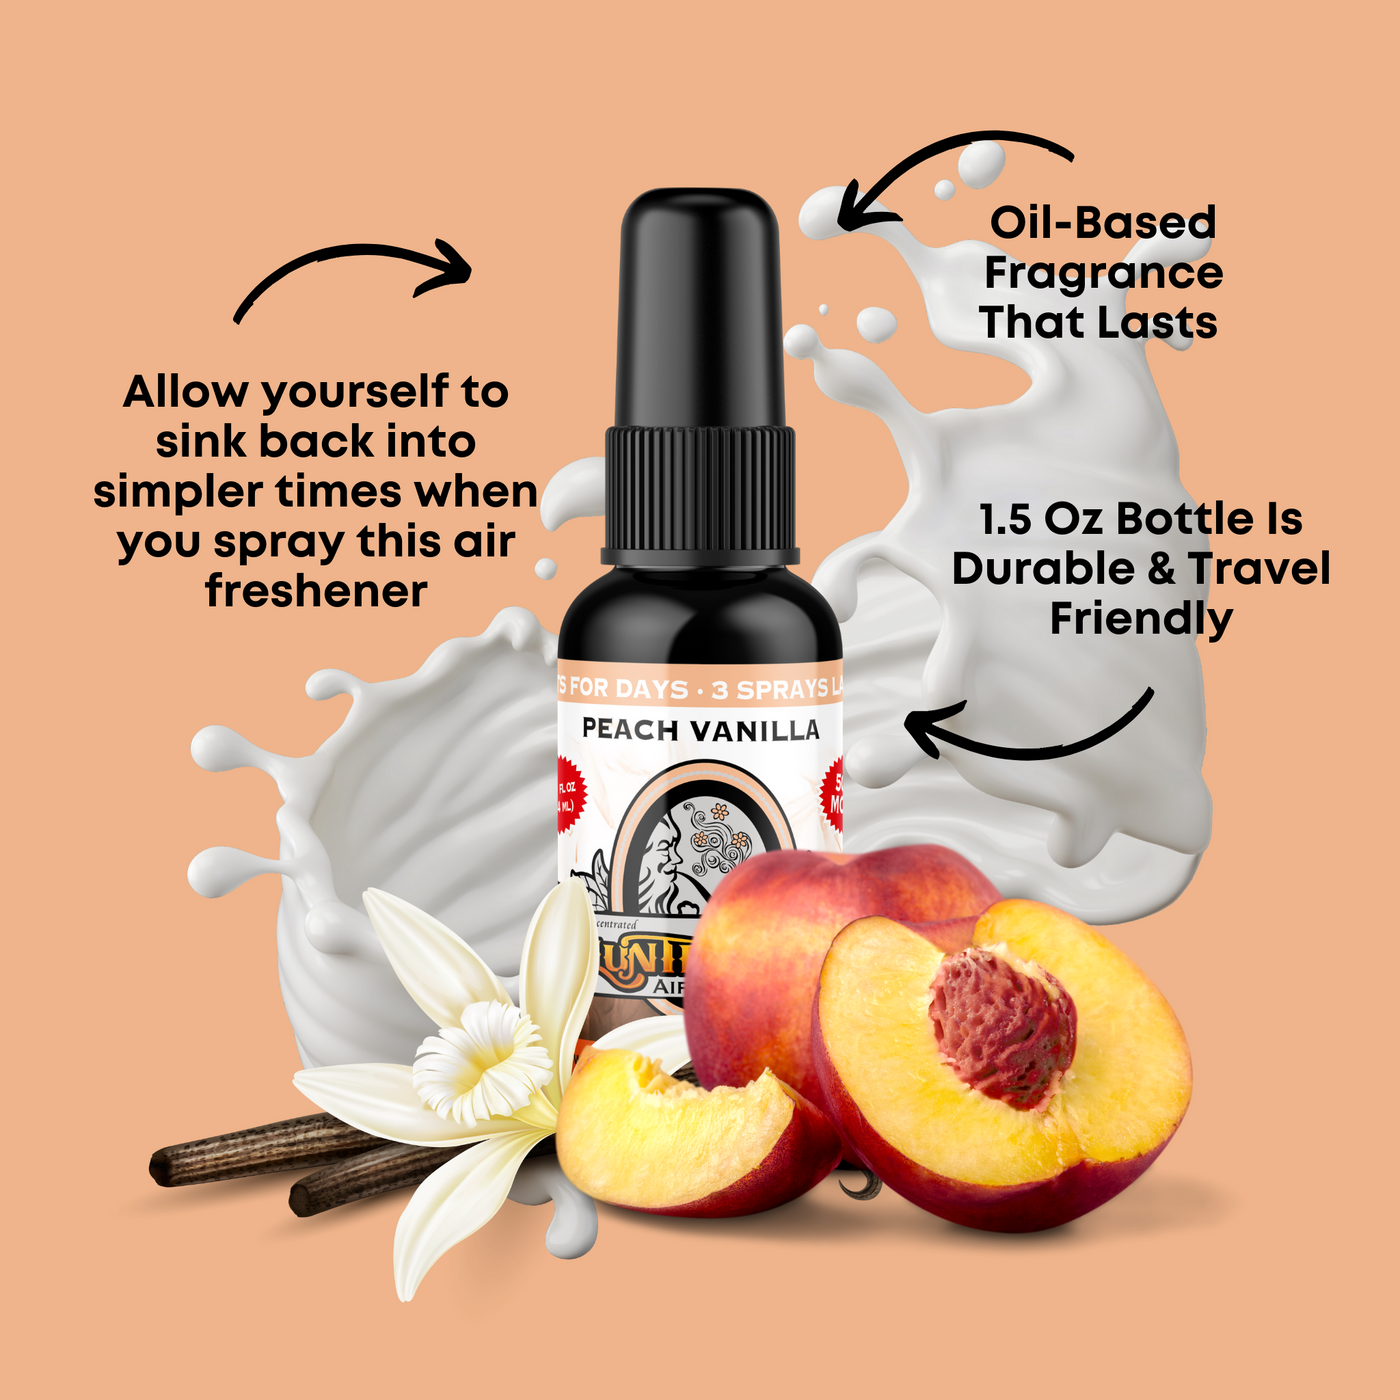 Peach Vanilla Air Freshener Spray